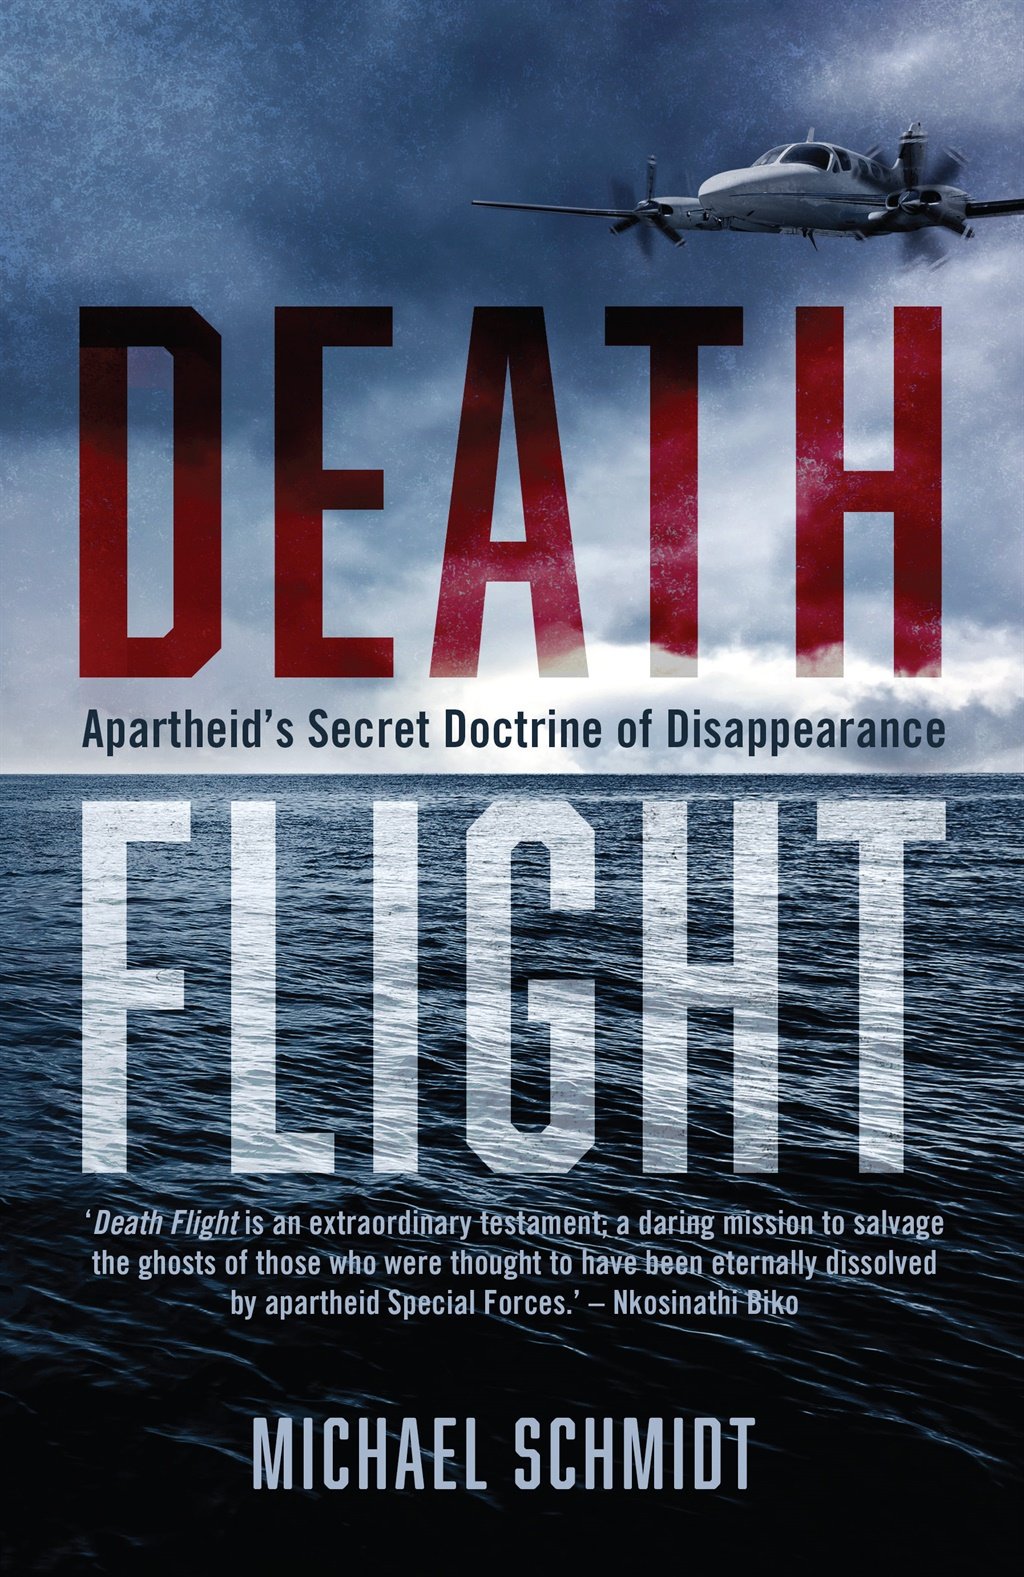 Death Flight: Apartheid’s secret doctrine of disappearance by investigative journalist Michael Schmidt.